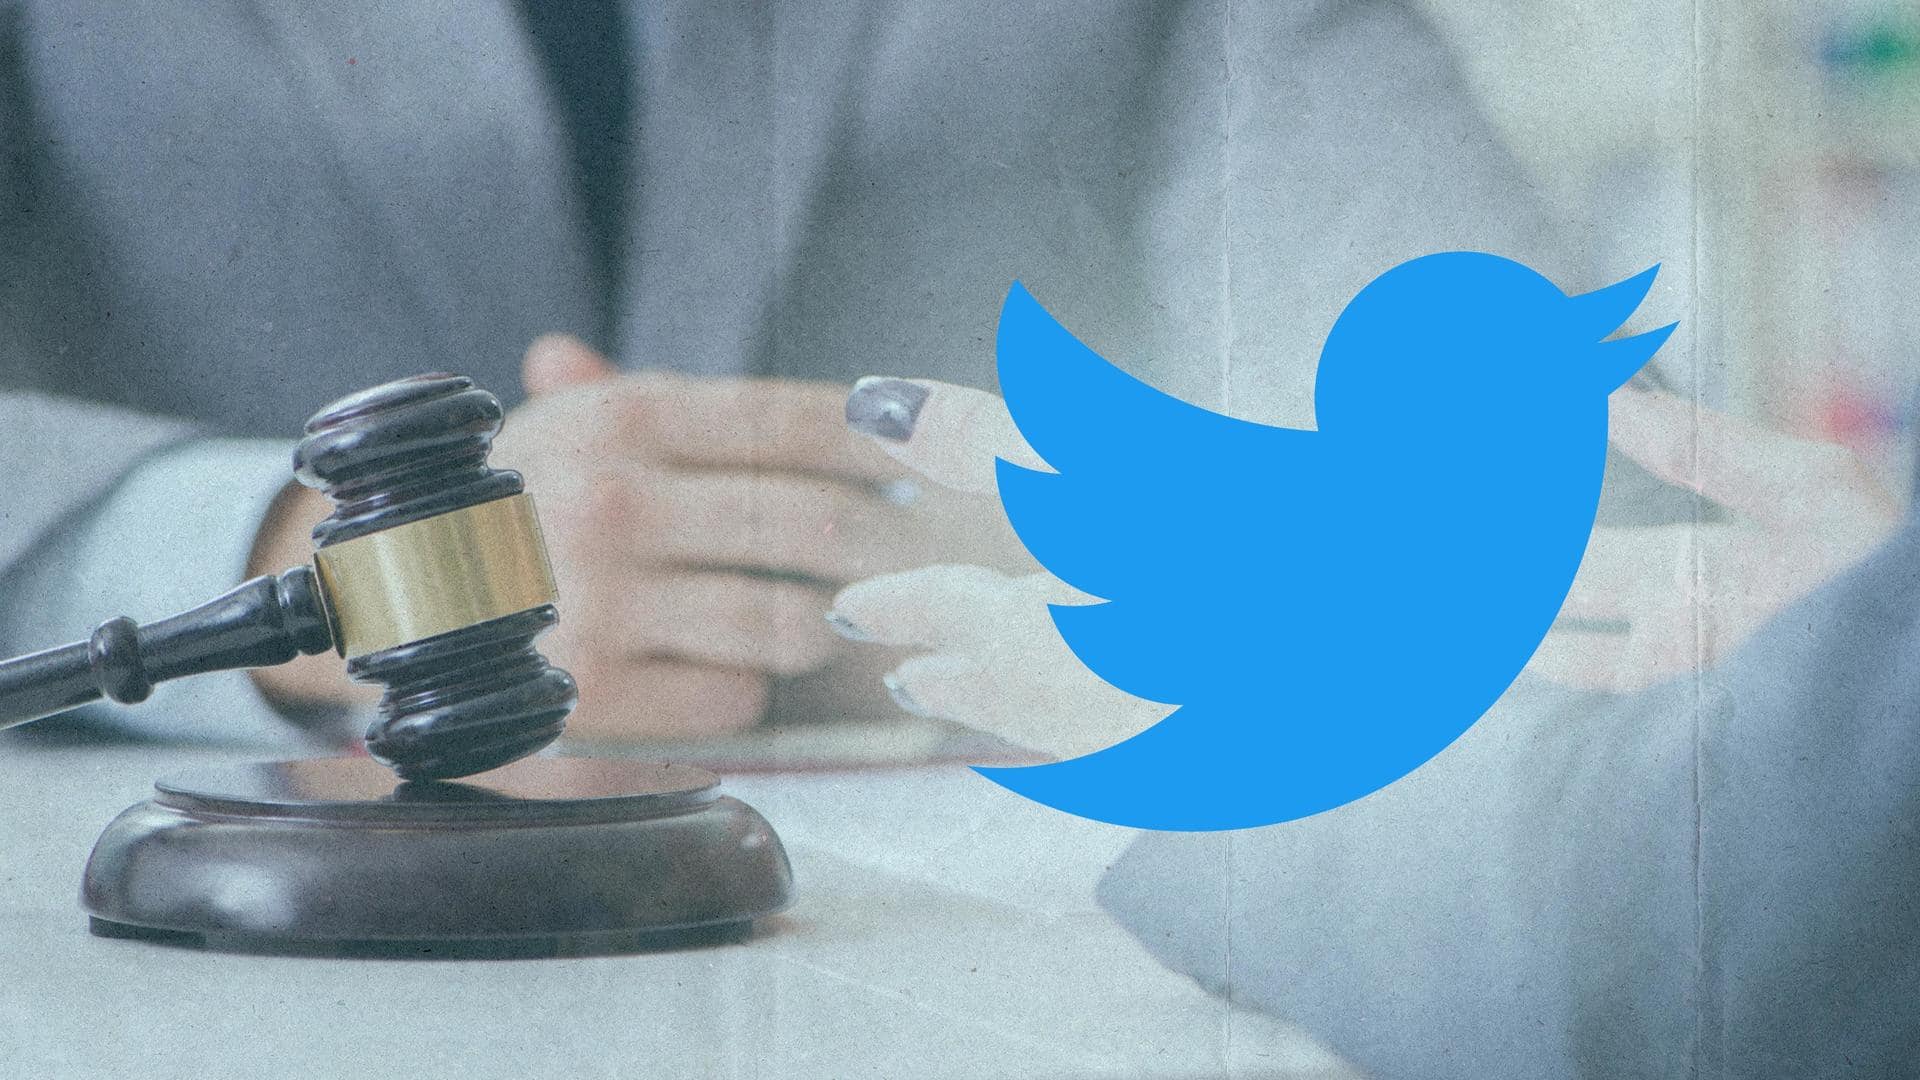 Music publishers accuse Twitter of copyright infringement, seek $250 million